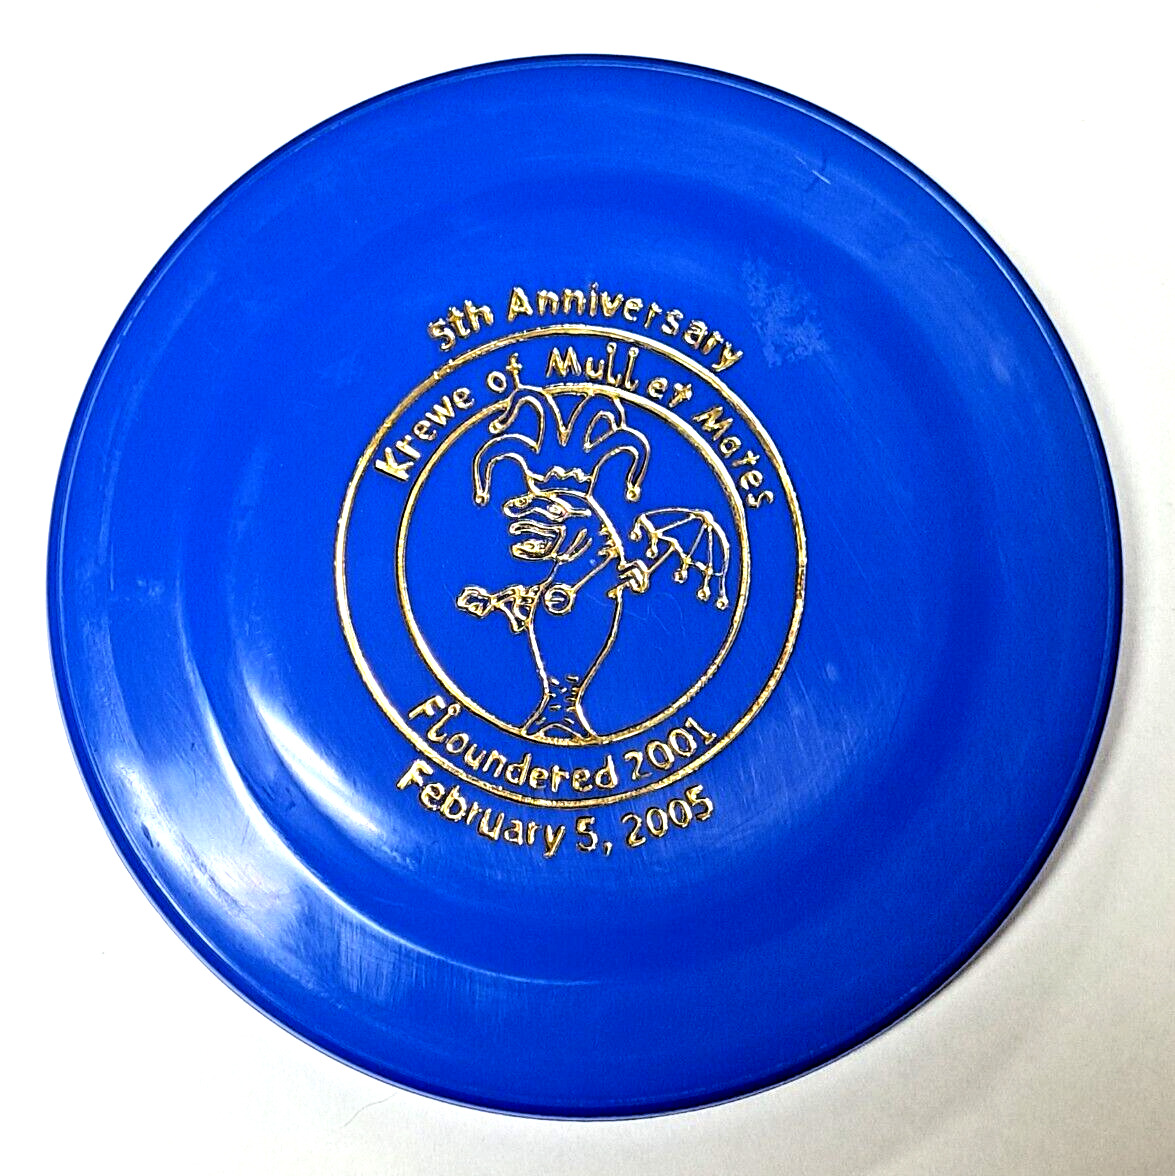 Krewe of Mullet Mates 5th Anniversary Feb 5, 2005 blue 7 inch frisbee Mardi Gras